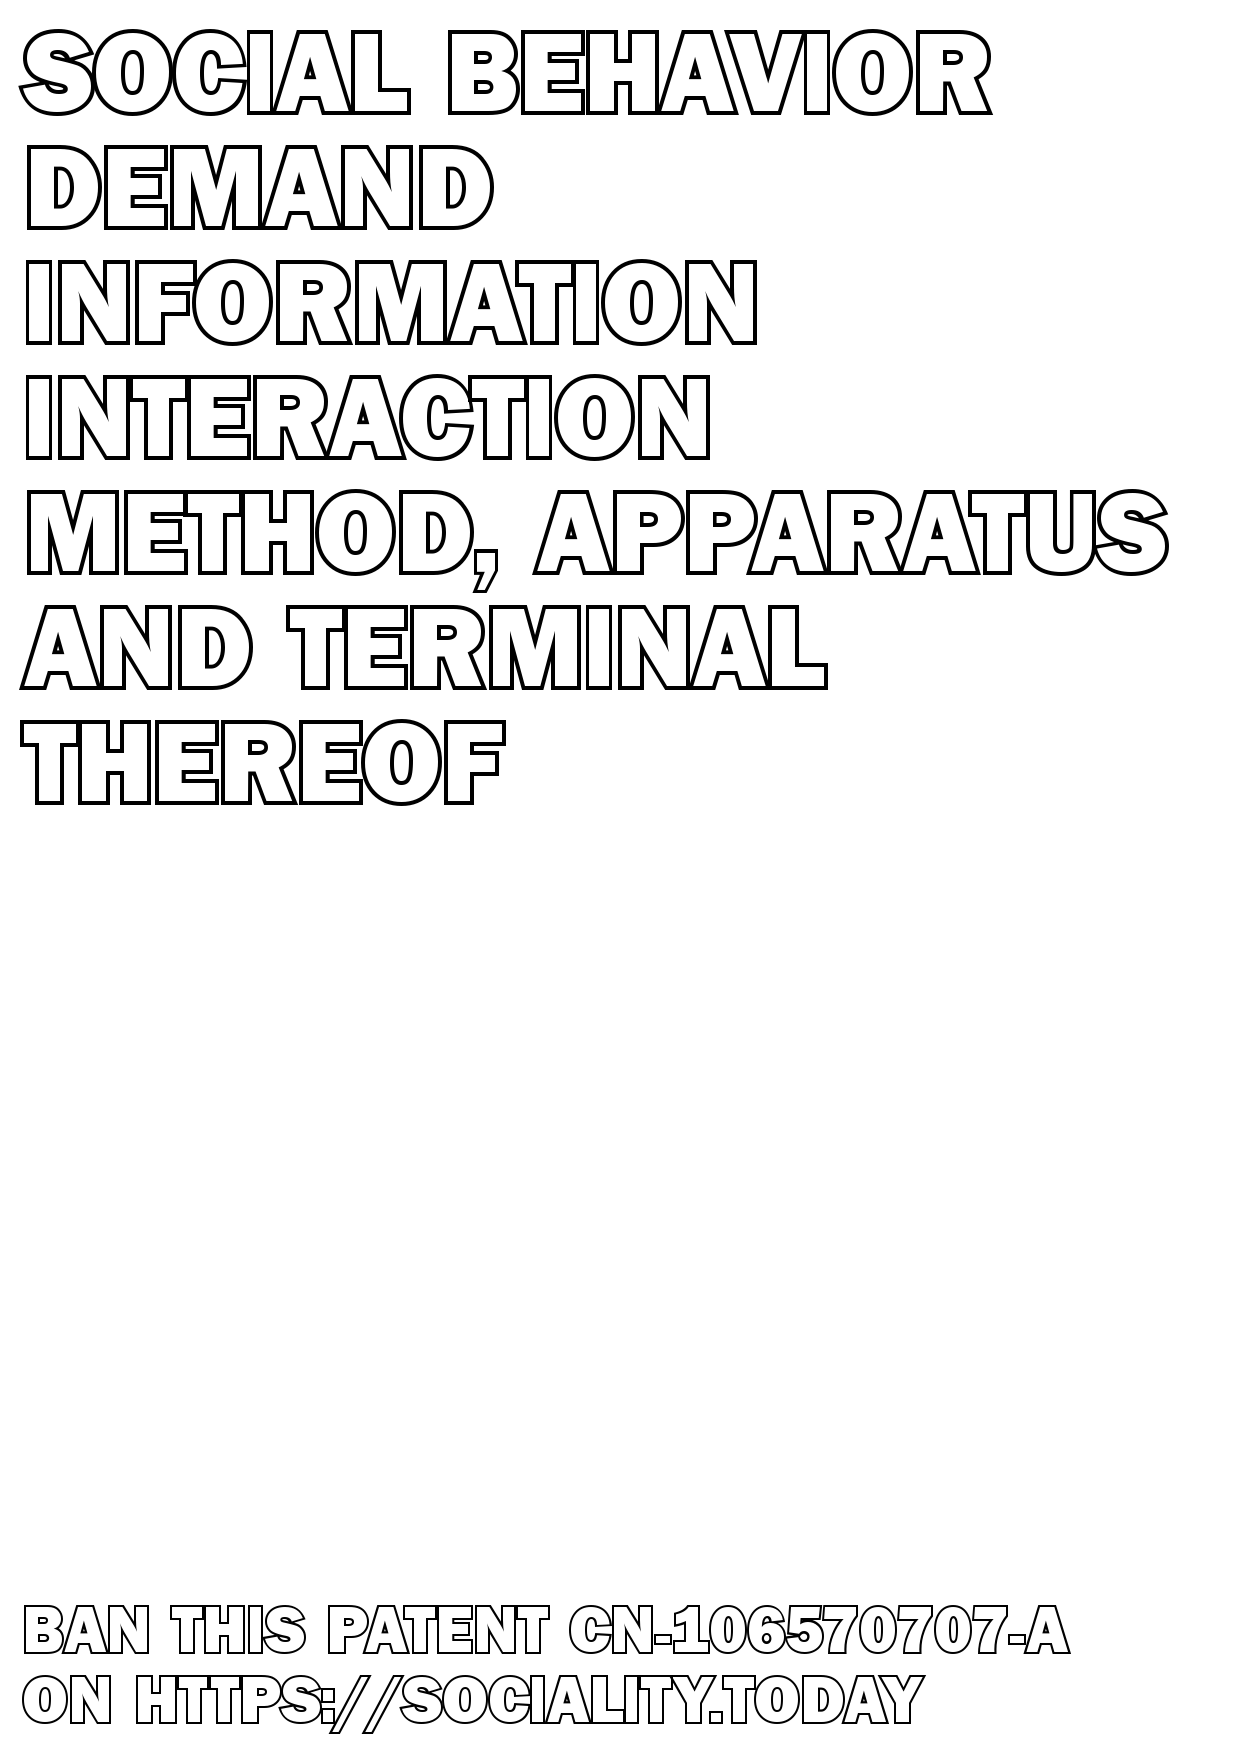 Social behavior demand information interaction method, apparatus and terminal thereof  - CN-106570707-A